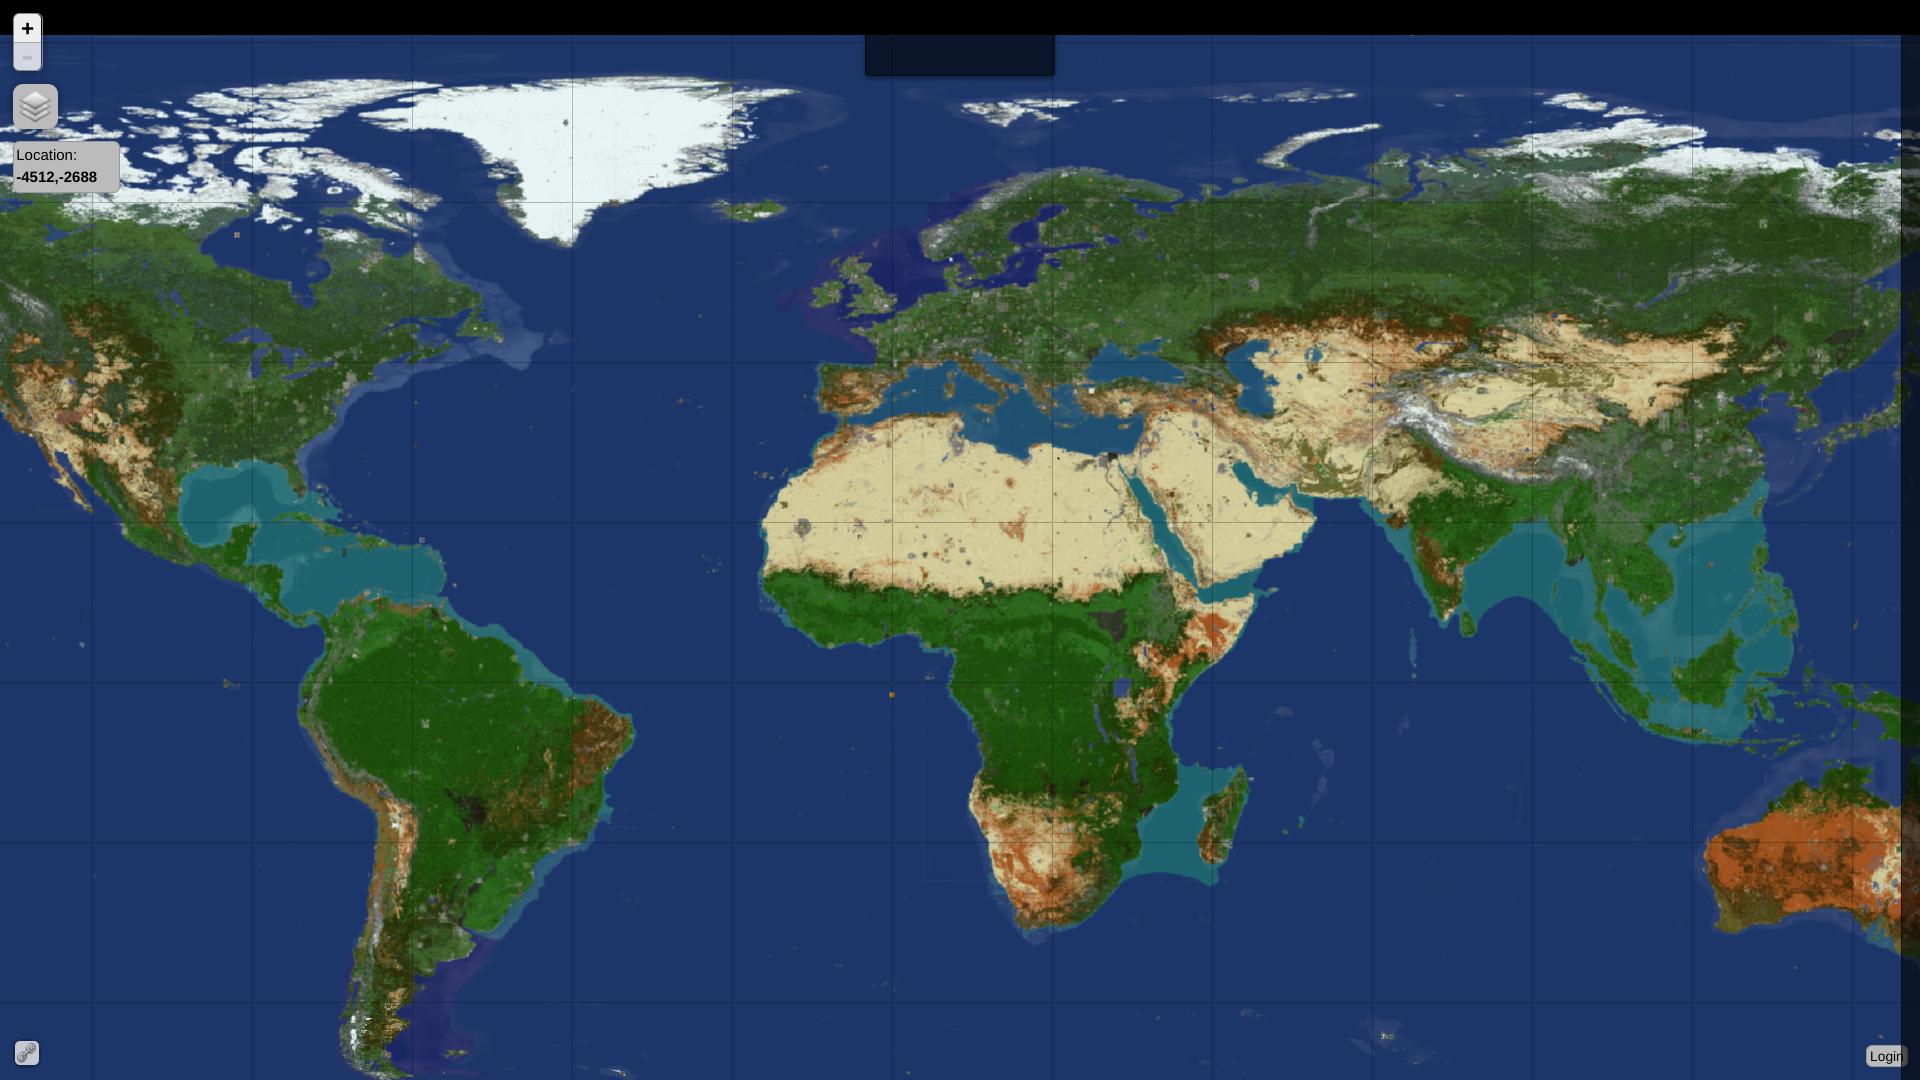 Minecraft earth map